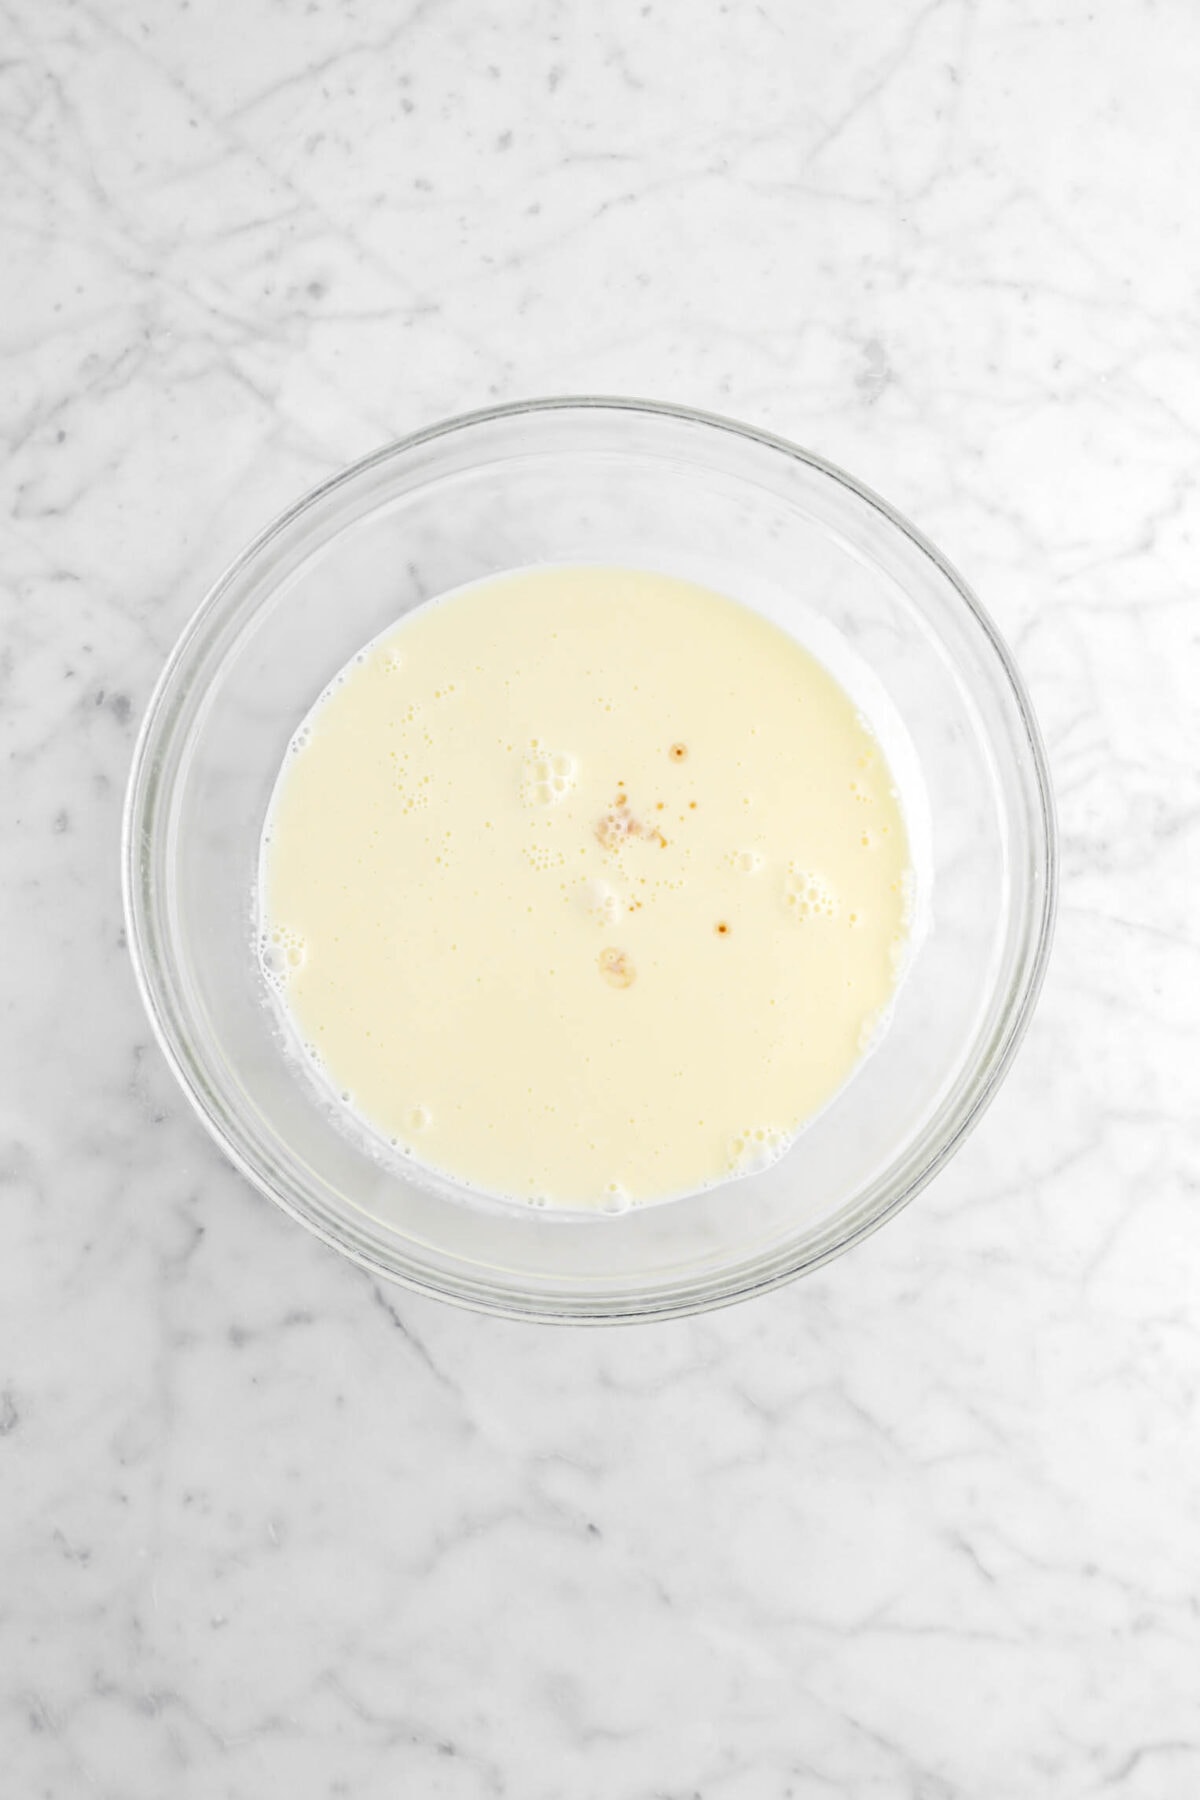 vanilla and custard in glass bowl